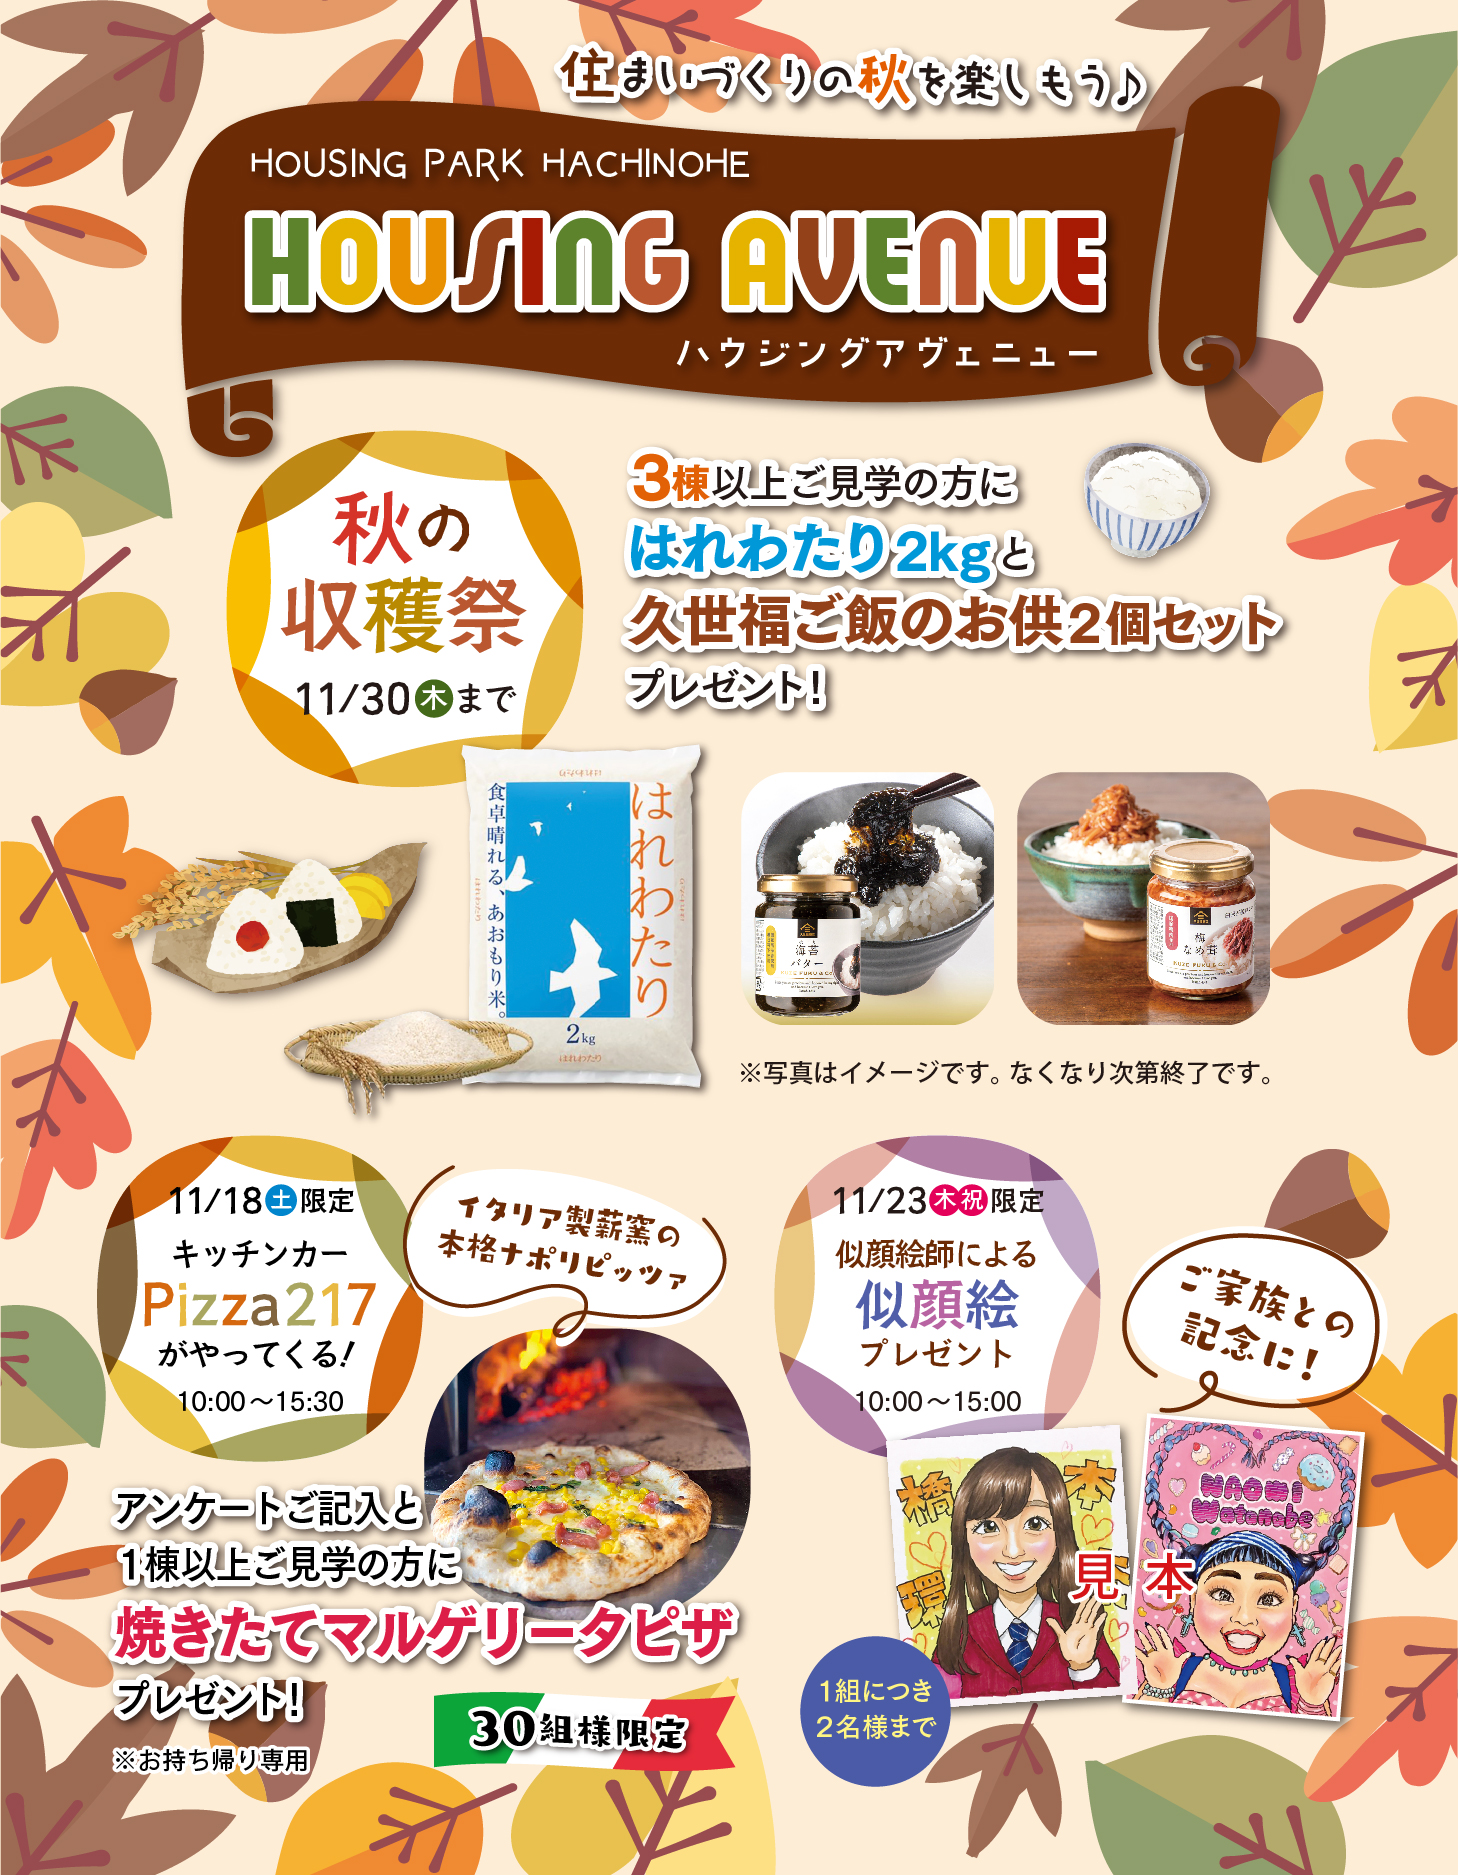 HOUSING AVENUE in八戸